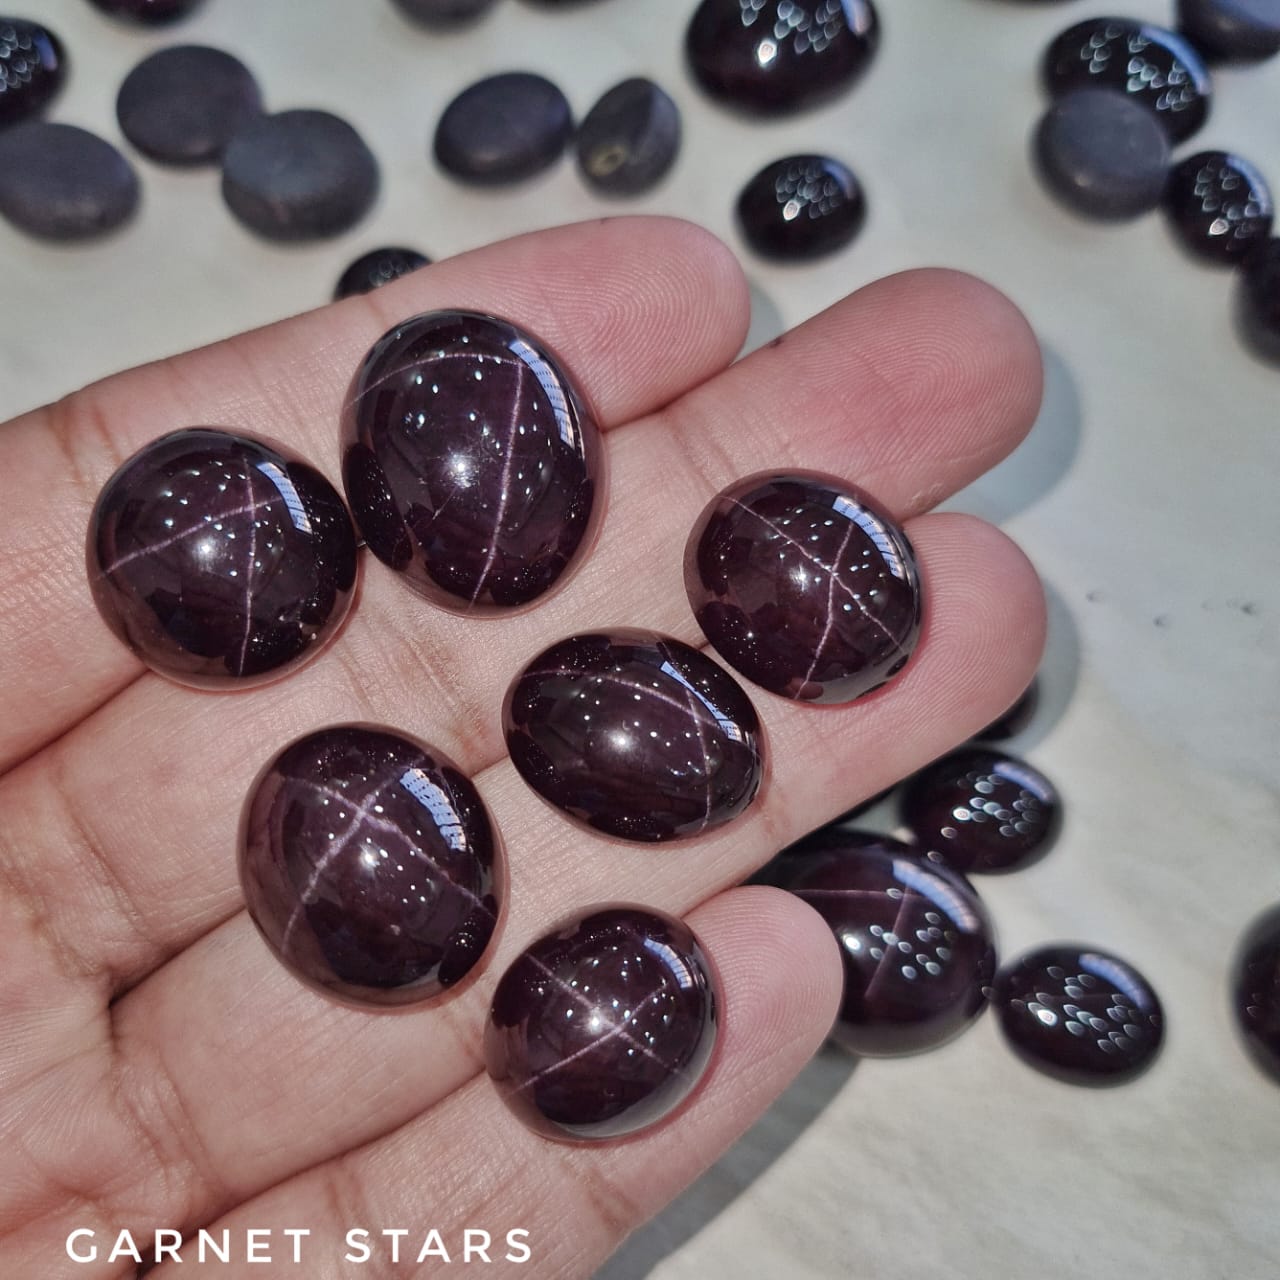 5 Pcs of Garnet Stars Cabochons | 12-20mm - The LabradoriteKing